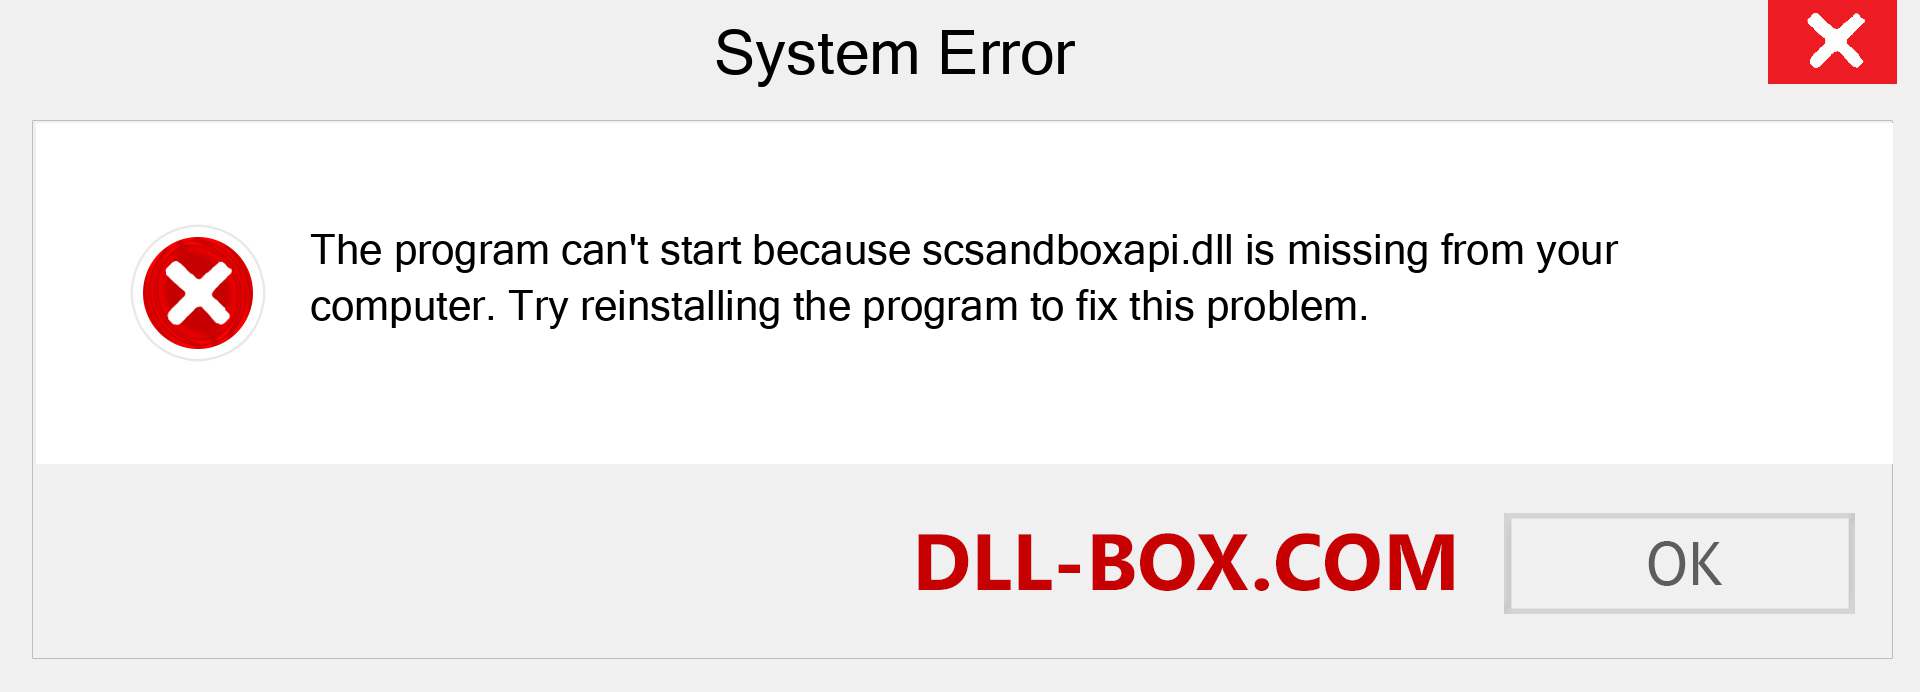  scsandboxapi.dll file is missing?. Download for Windows 7, 8, 10 - Fix  scsandboxapi dll Missing Error on Windows, photos, images